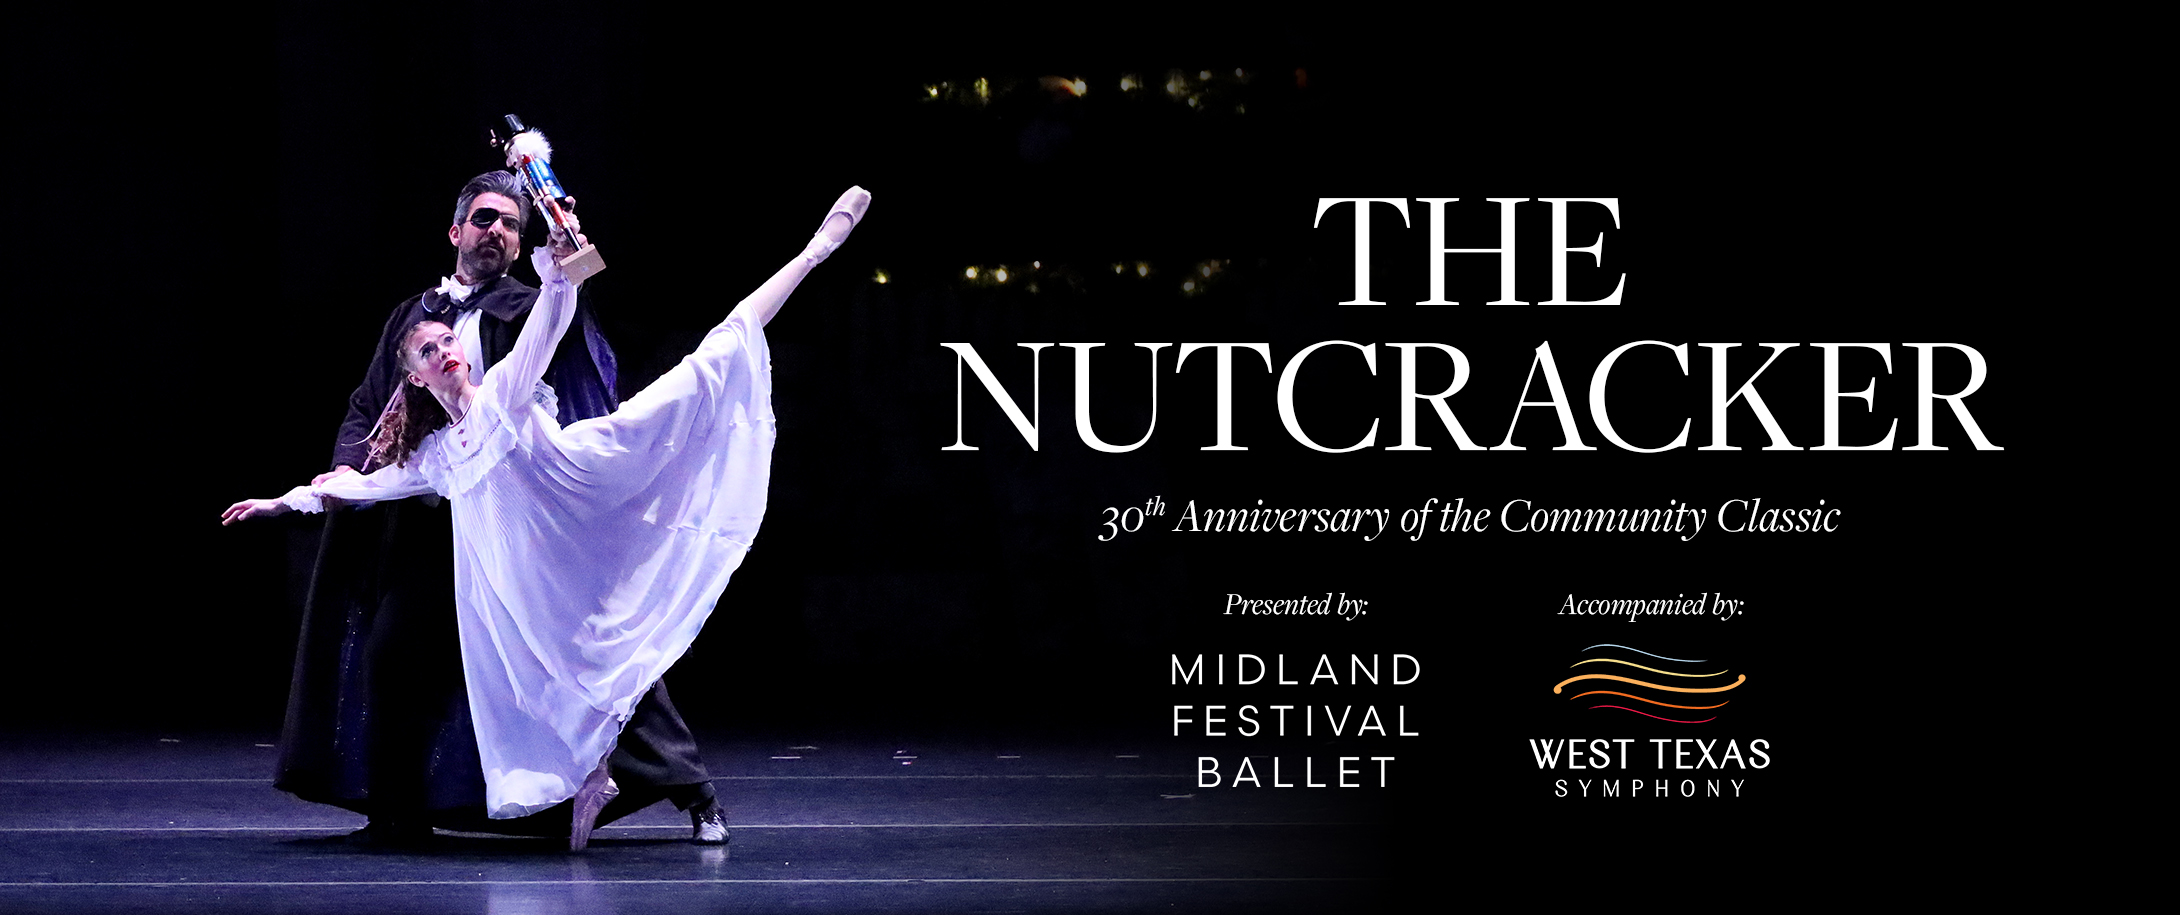 Midland Festival Ballet Presents The Nutcracker 